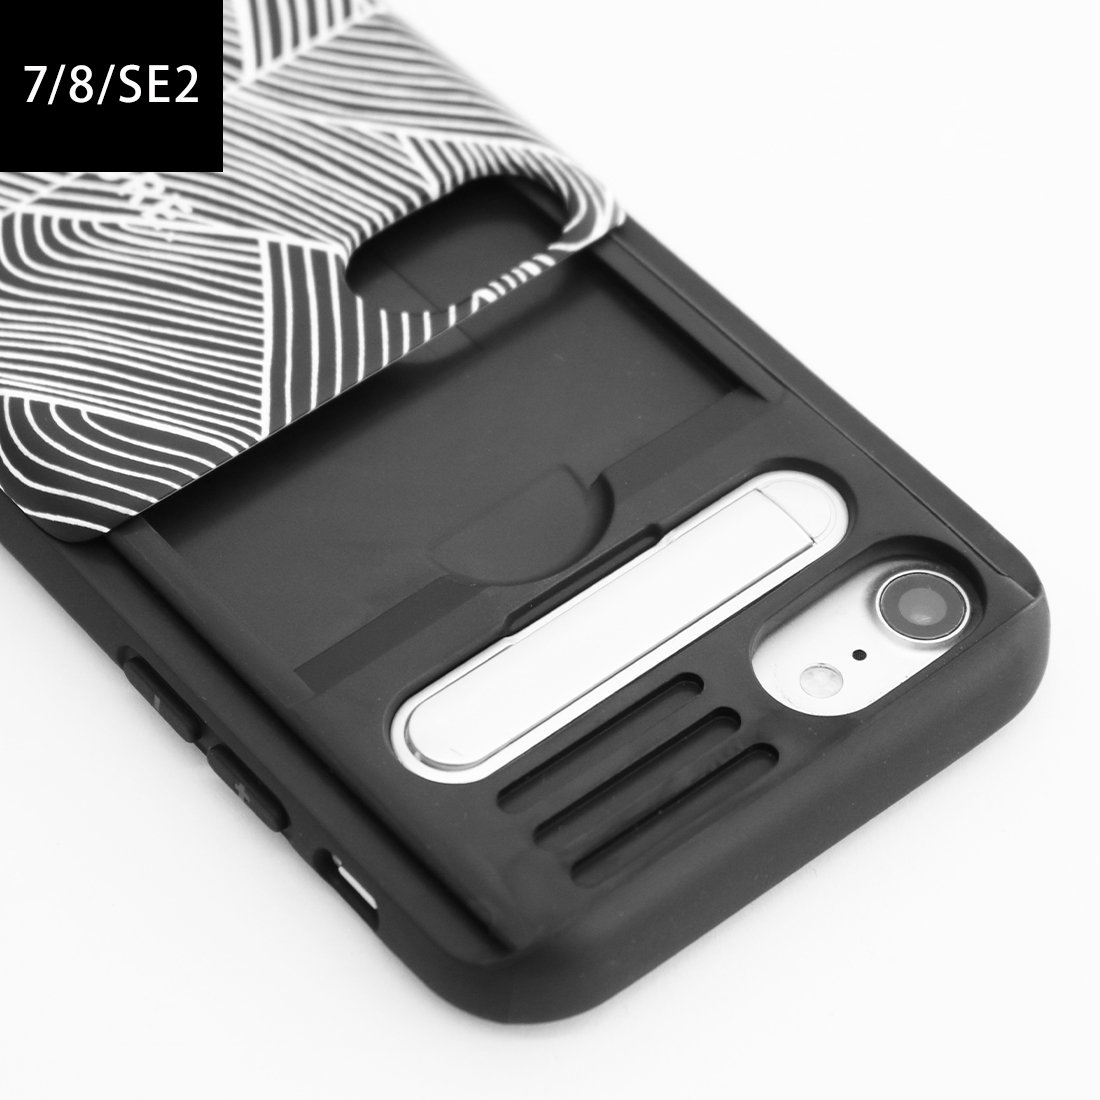 KLON ／ ISAMONYO SLIDE iPhone CASE -Turf- カジュアル 腕時計